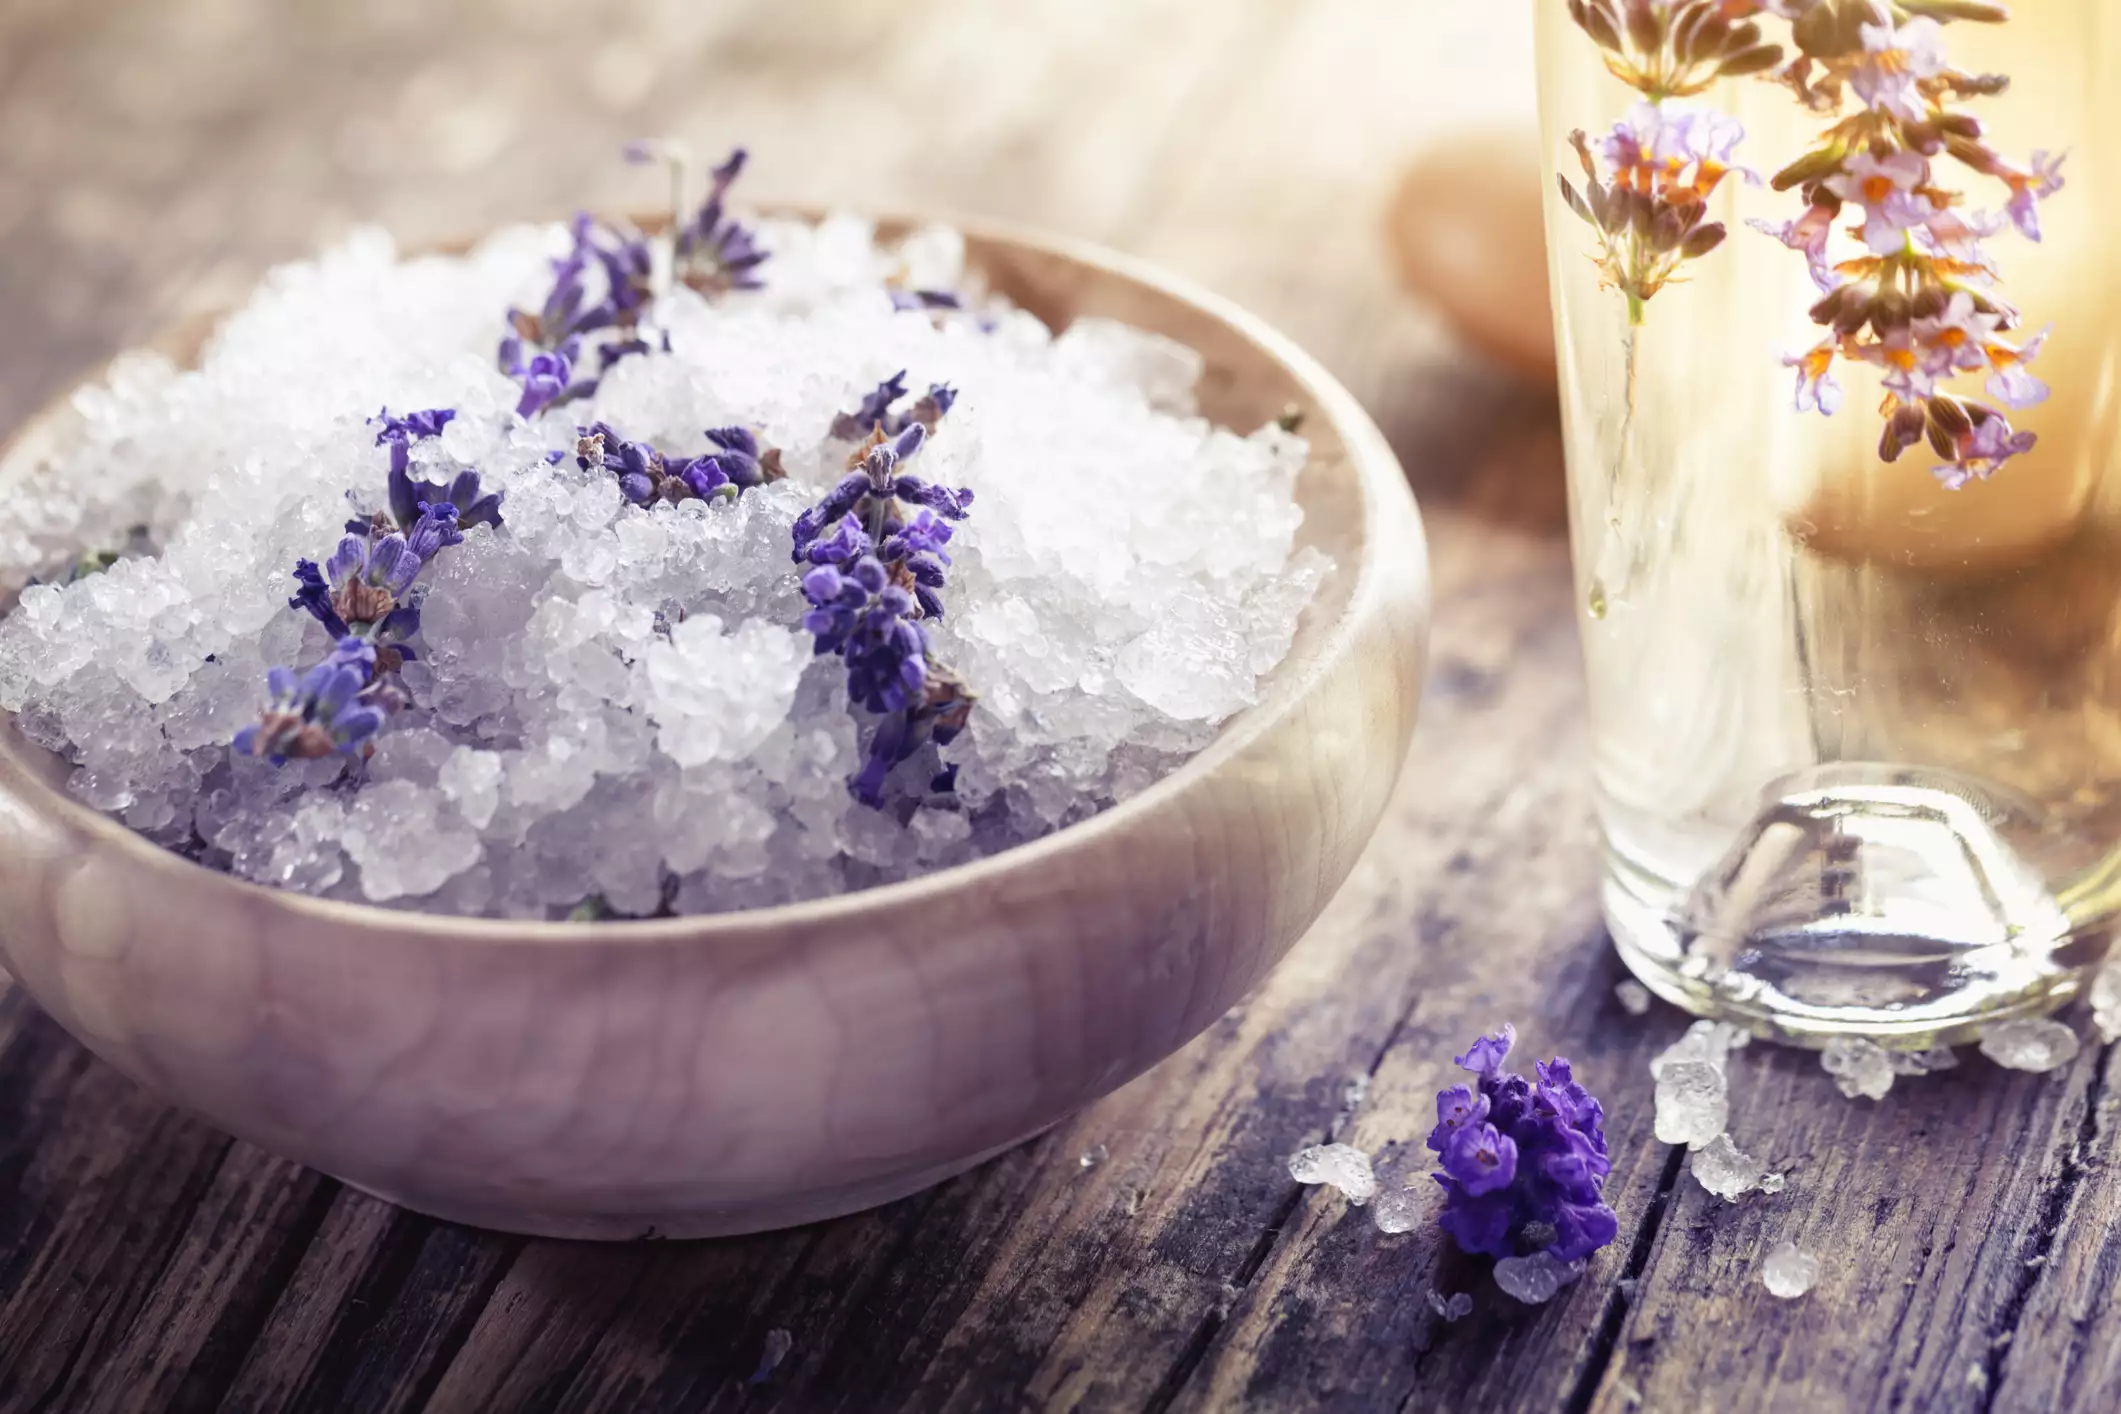 Lavender aromatherapy bath salt and massage oil